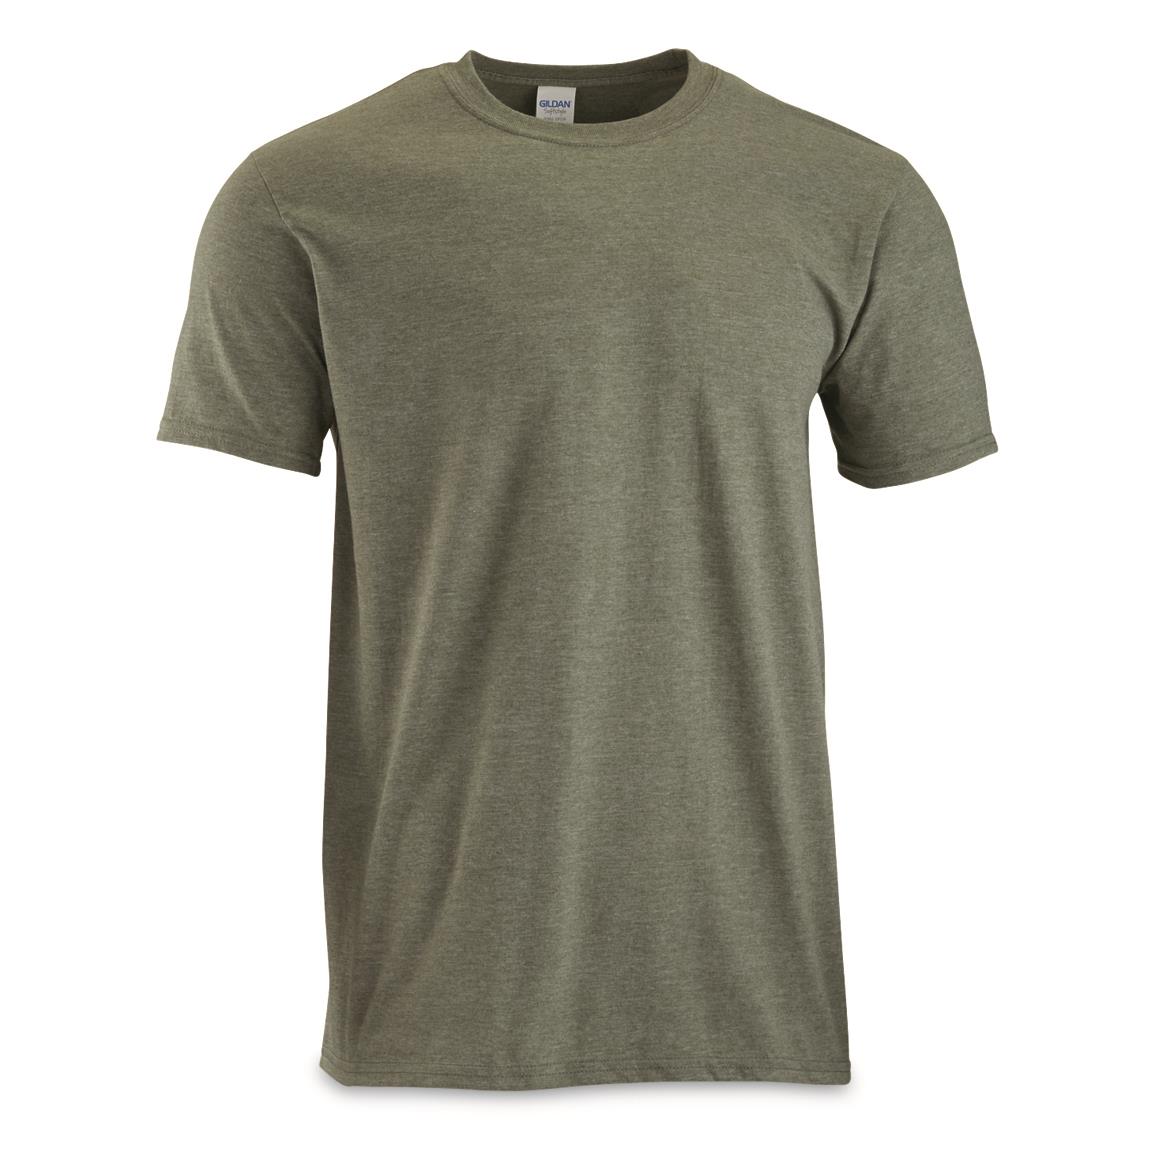 U.S. Military Surplus Crew Neck T-Shirts, 8 Pack, New, Sage Green